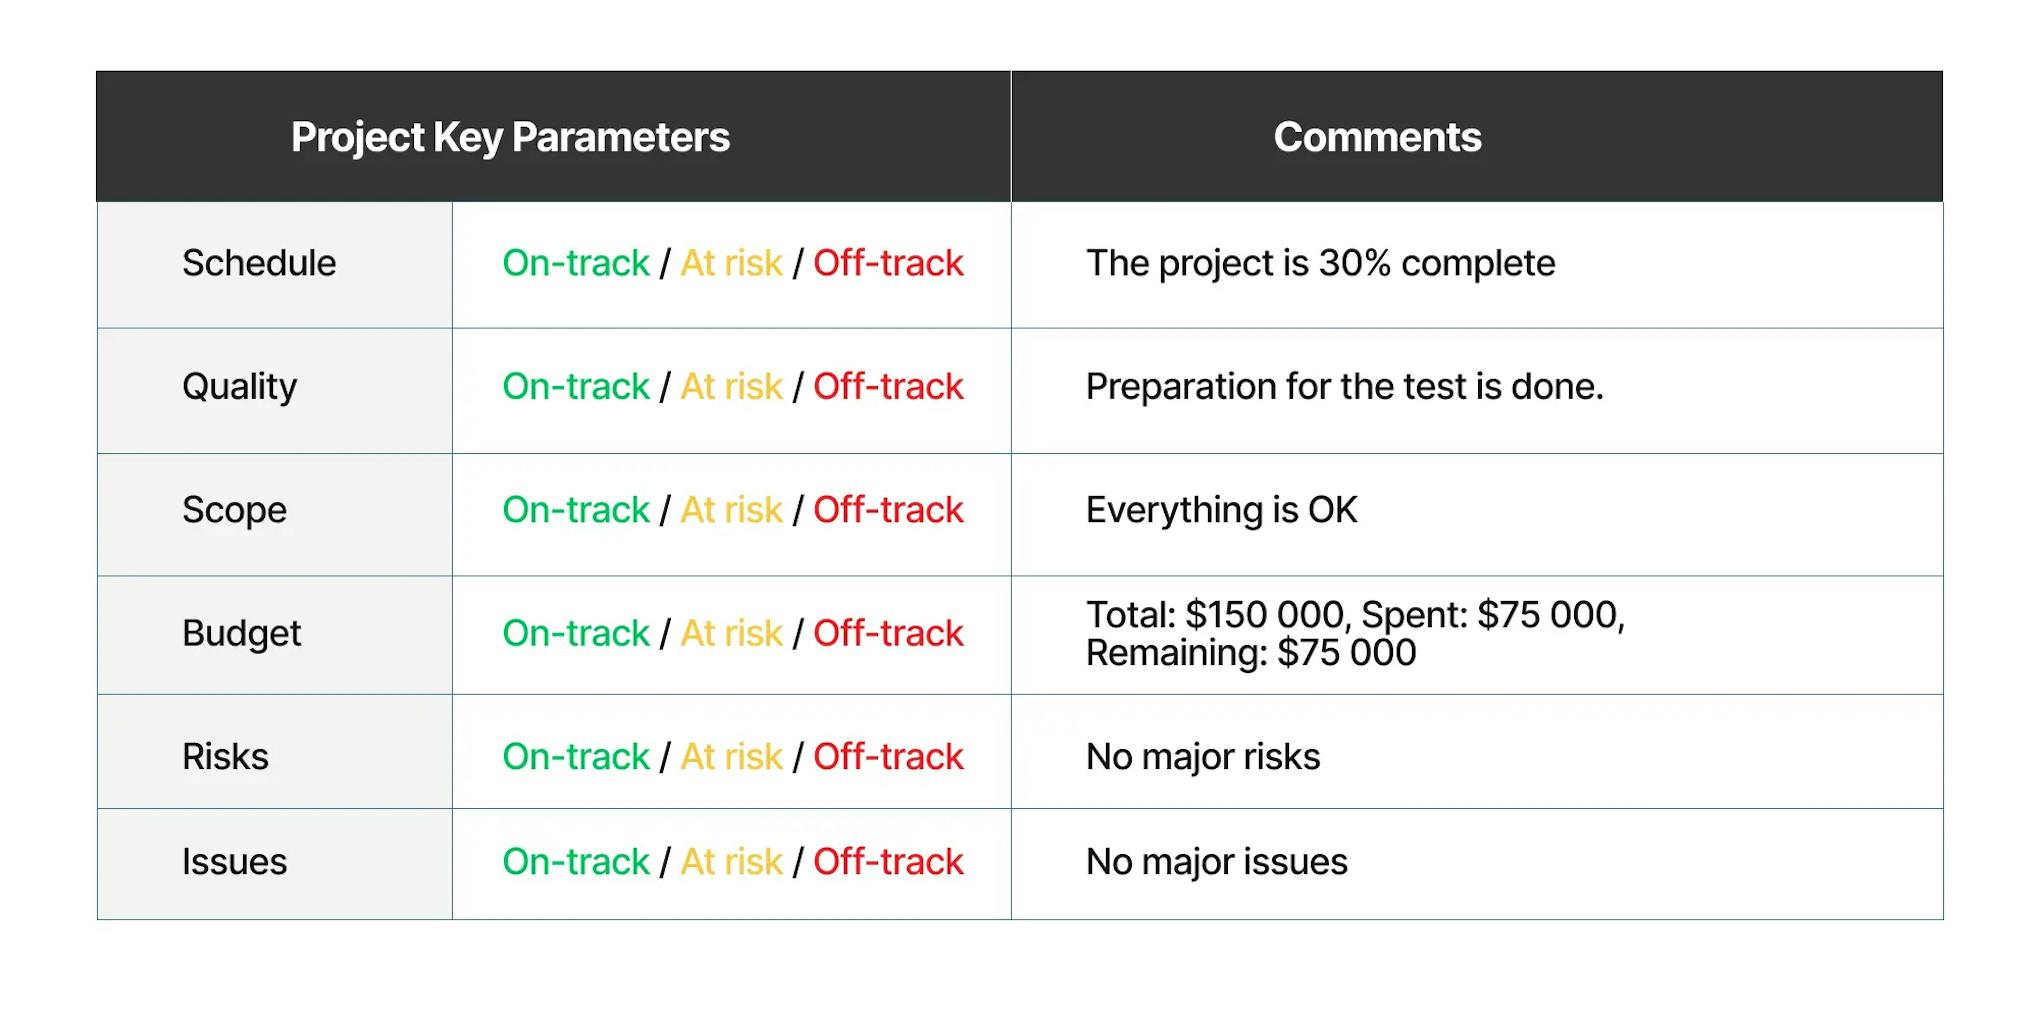 Project Key Parameters